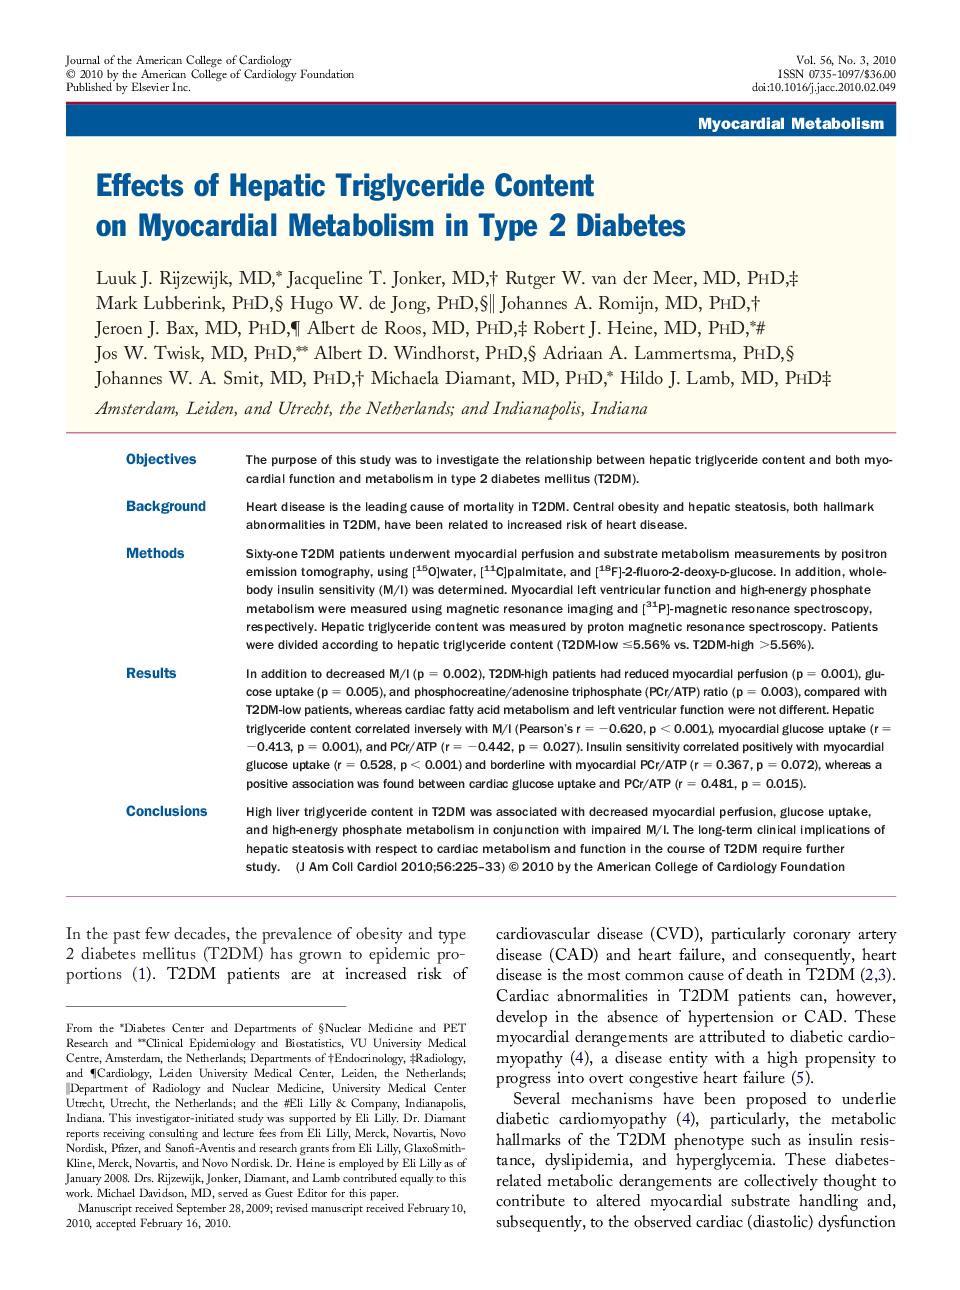 Effects of Hepatic Triglyceride Content on Myocardial Metabolism in Type 2 Diabetes 